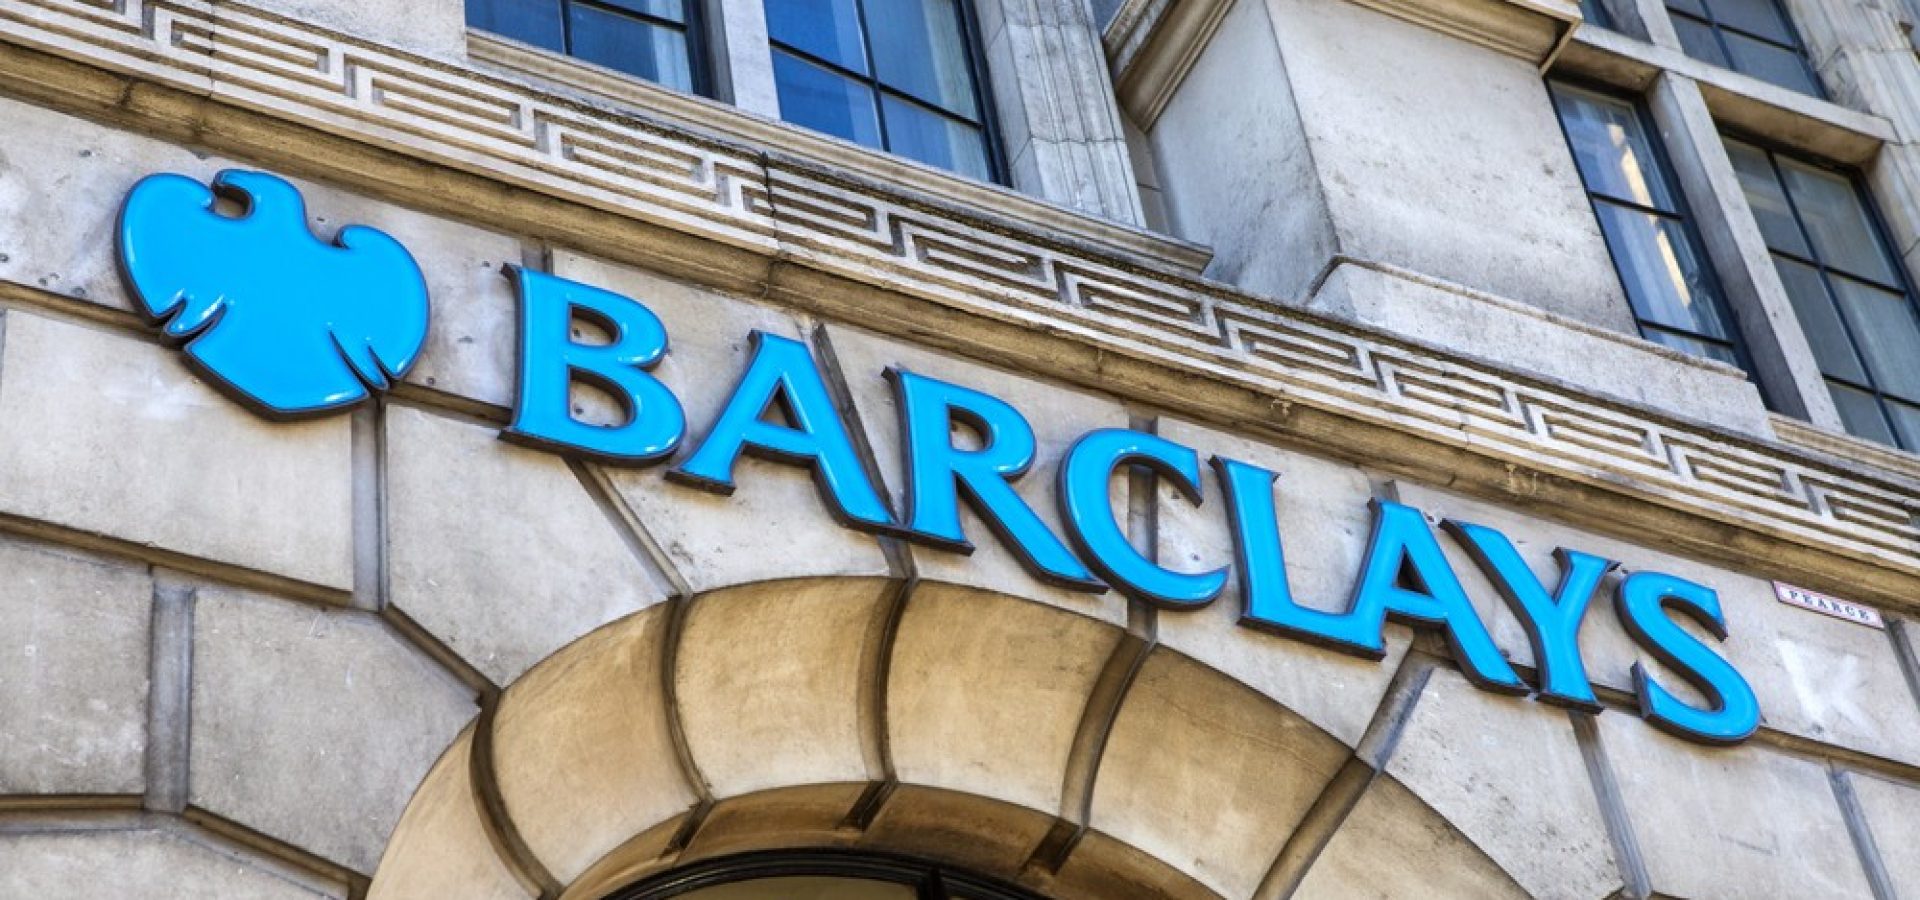 Barclays plc